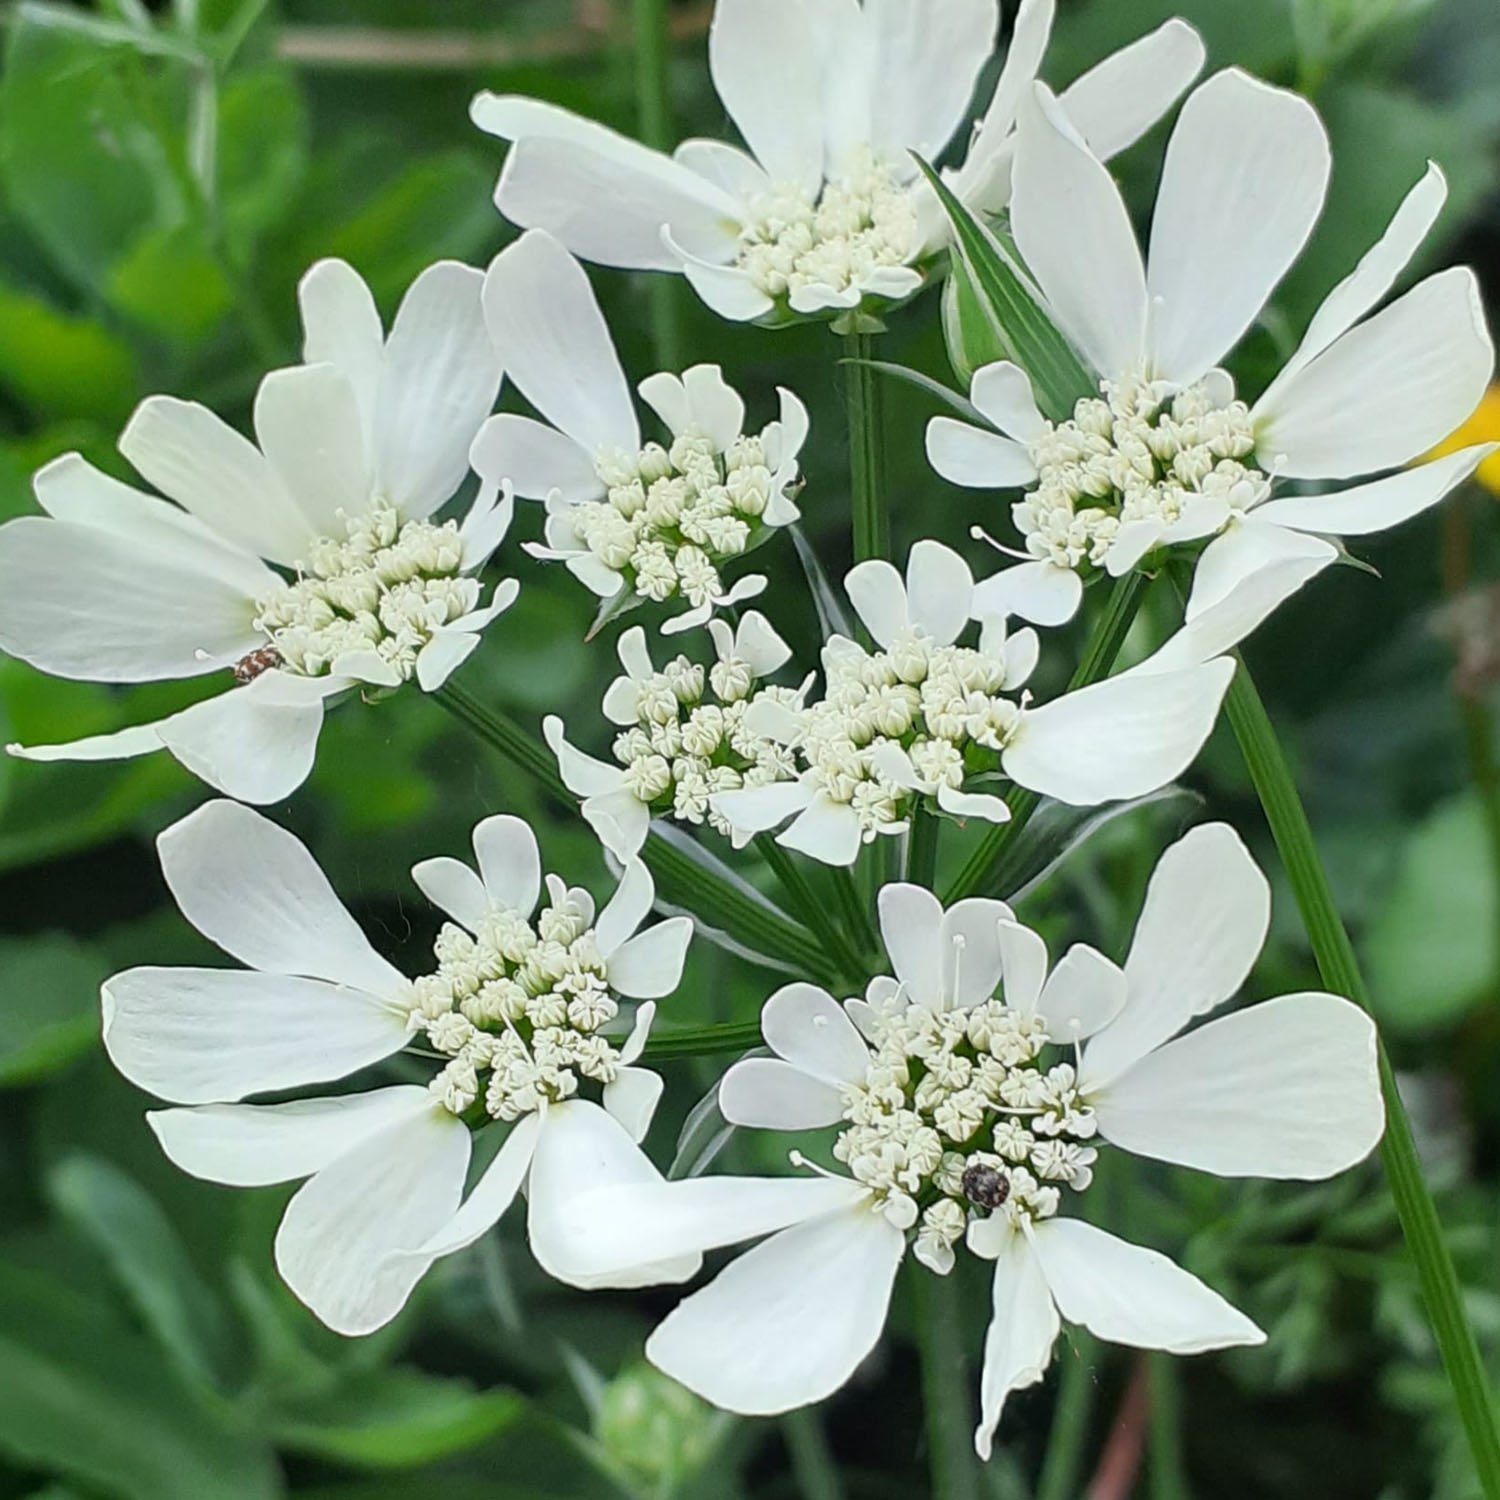 White Orlaya Flowers Close Up Early Summer.jpg